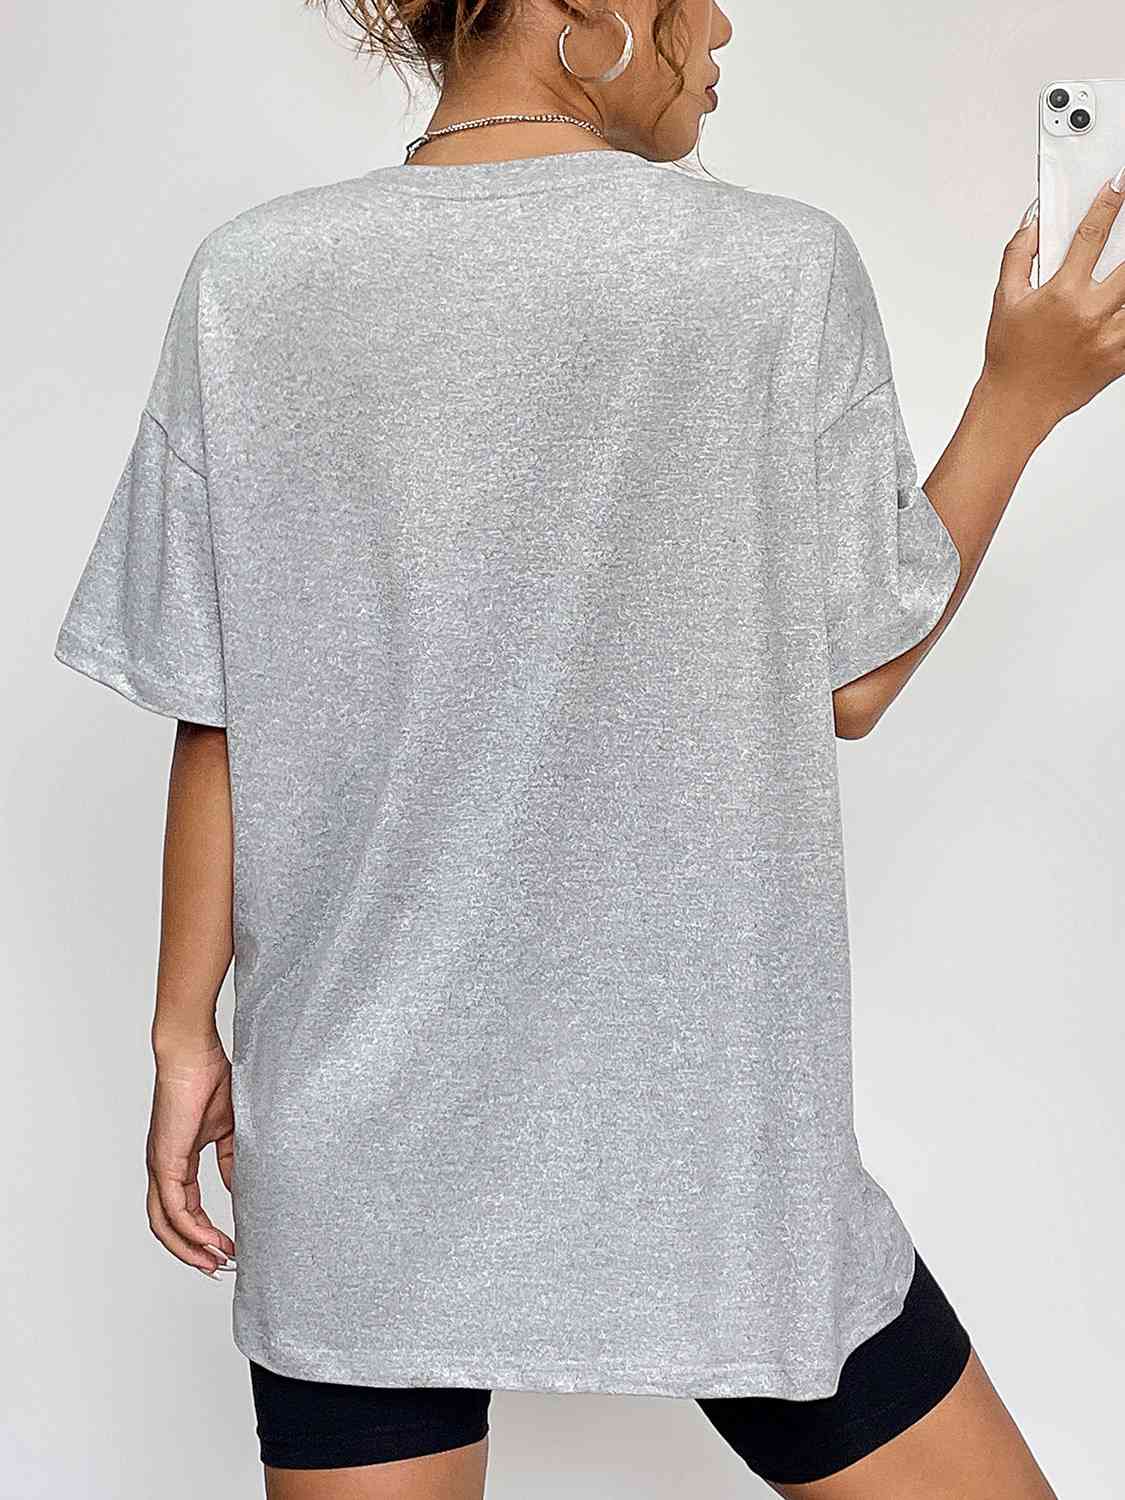 Round Neck Short Sleeve Never Better Graphic T-Shirt - Guy Christopher